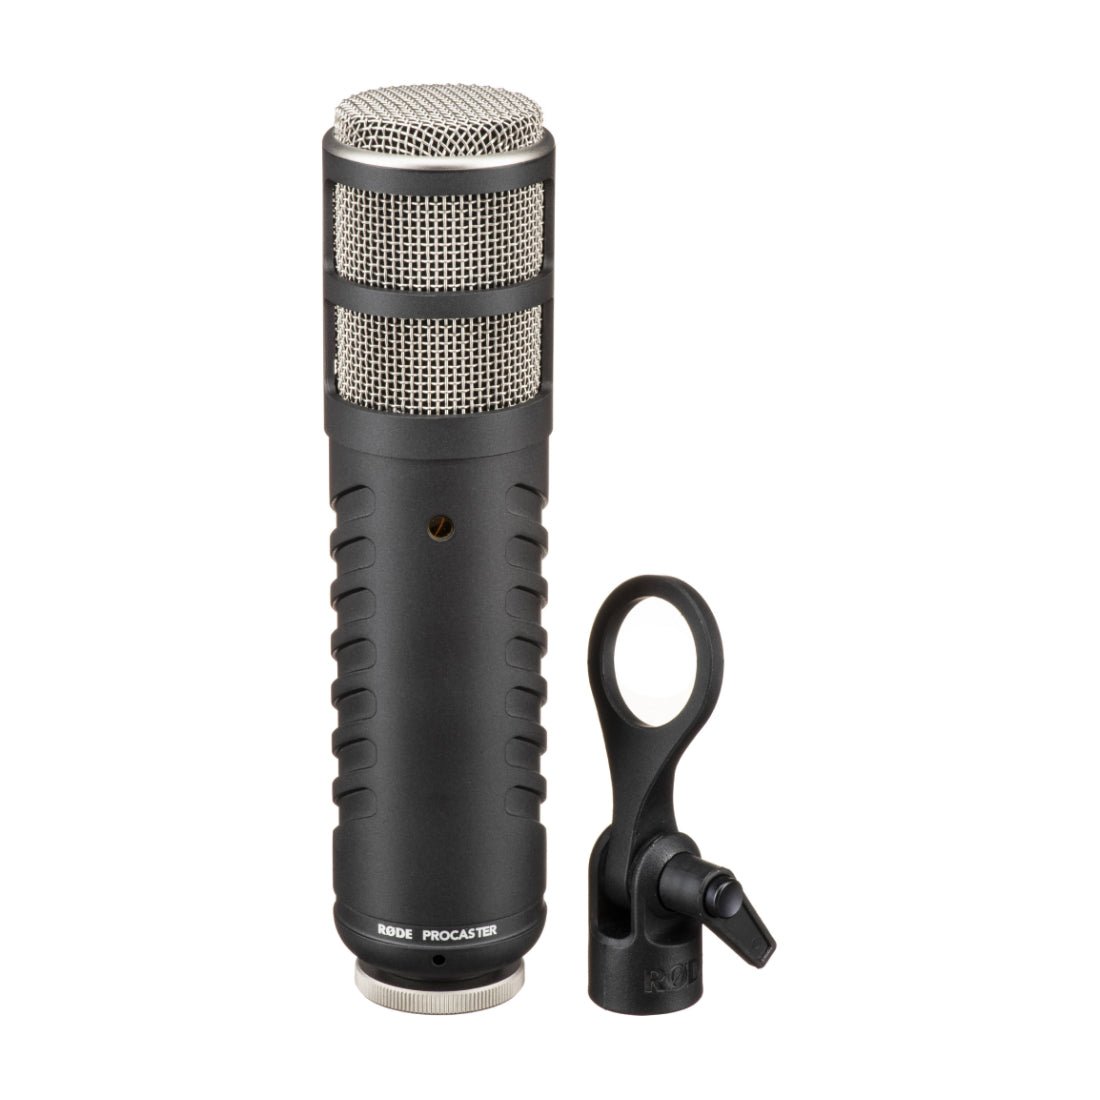 RØDE Procaster Broadcast-Quality Dynamic Microphone - ميكروفون - Store 974 | ستور ٩٧٤